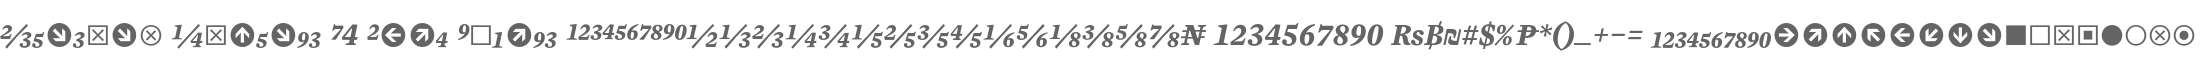 Mercury Numeric G4 Bold Italic